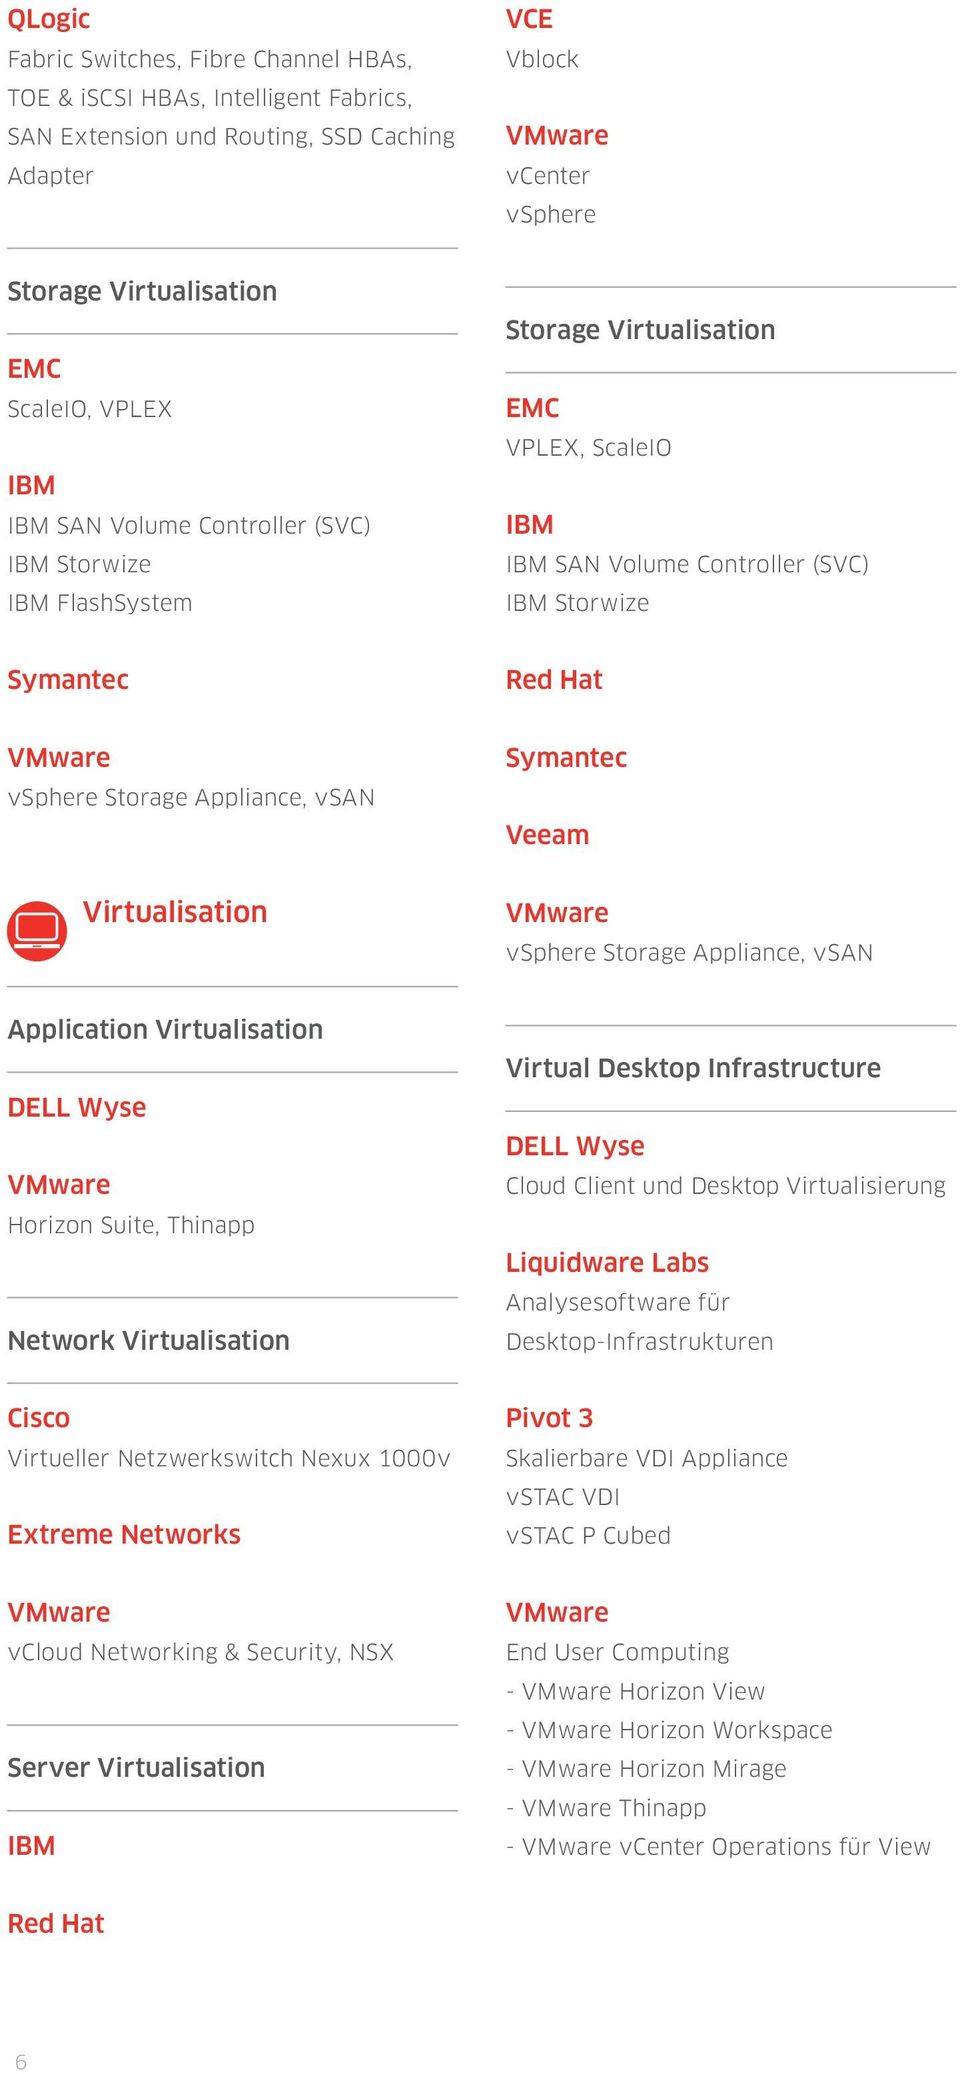 vsan Application Virtualisation DELL Wyse Horizon Suite, Thinapp Network Virtualisation Virtual Desktop Infrastructure DELL Wyse Cloud Client und Desktop Virtualisierung Liquidware Labs